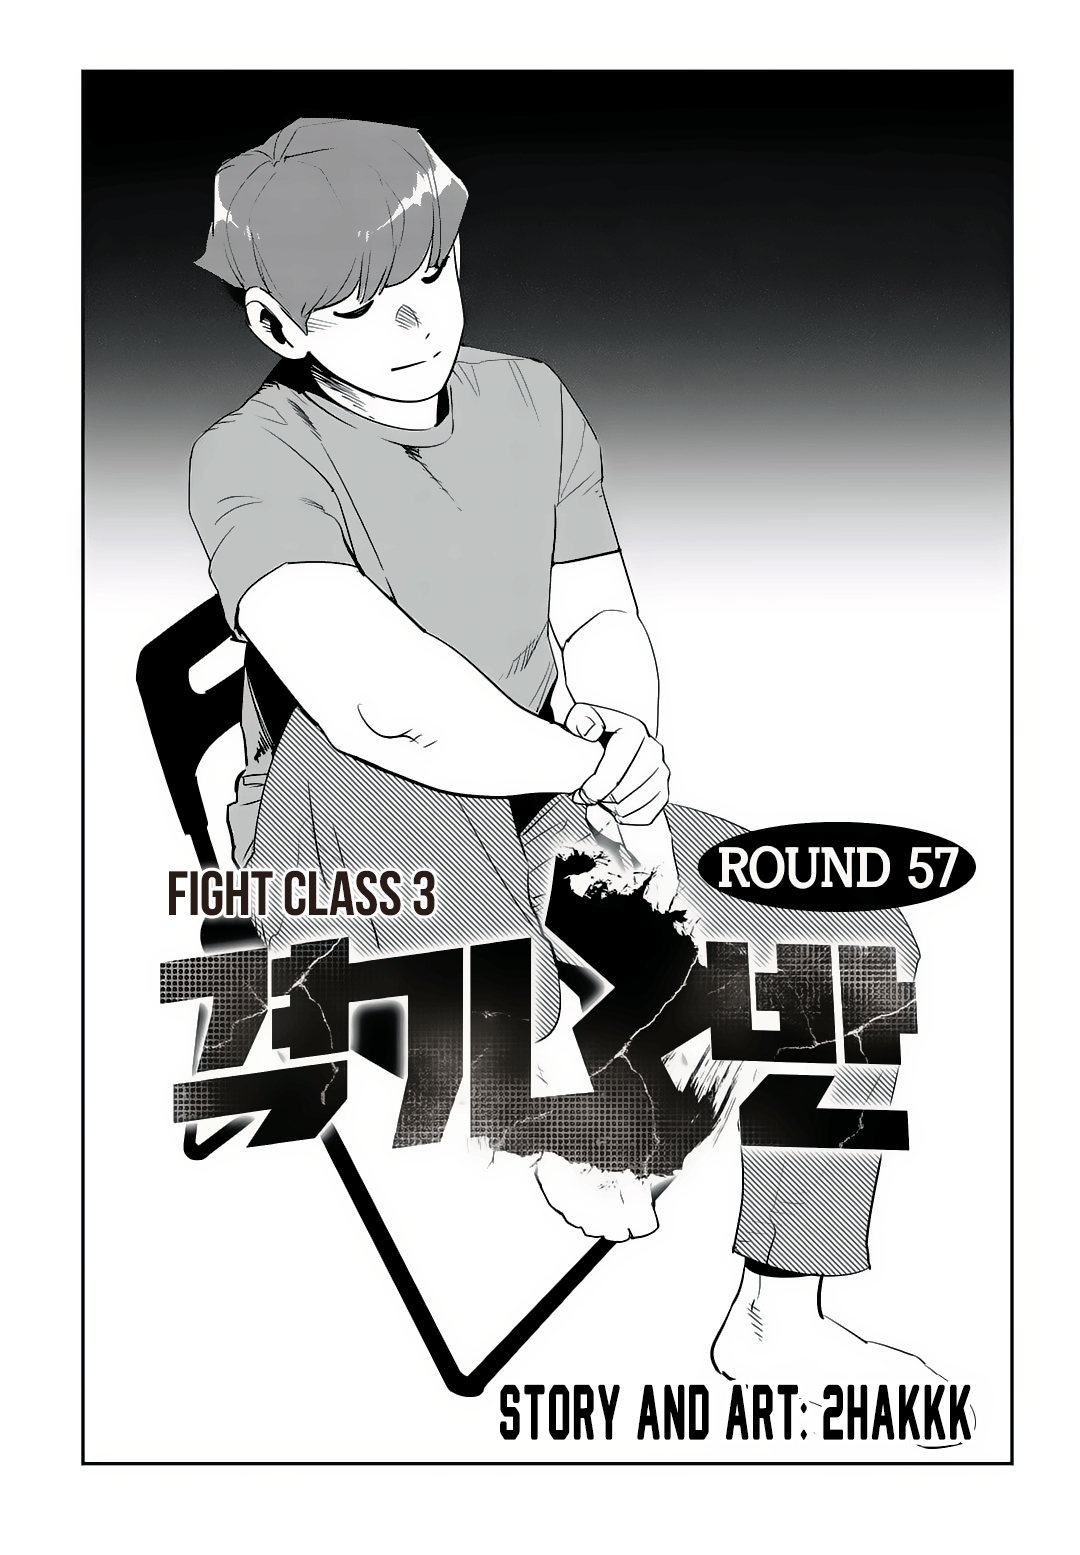 Fight Class 3 Ch. 57 Round 57